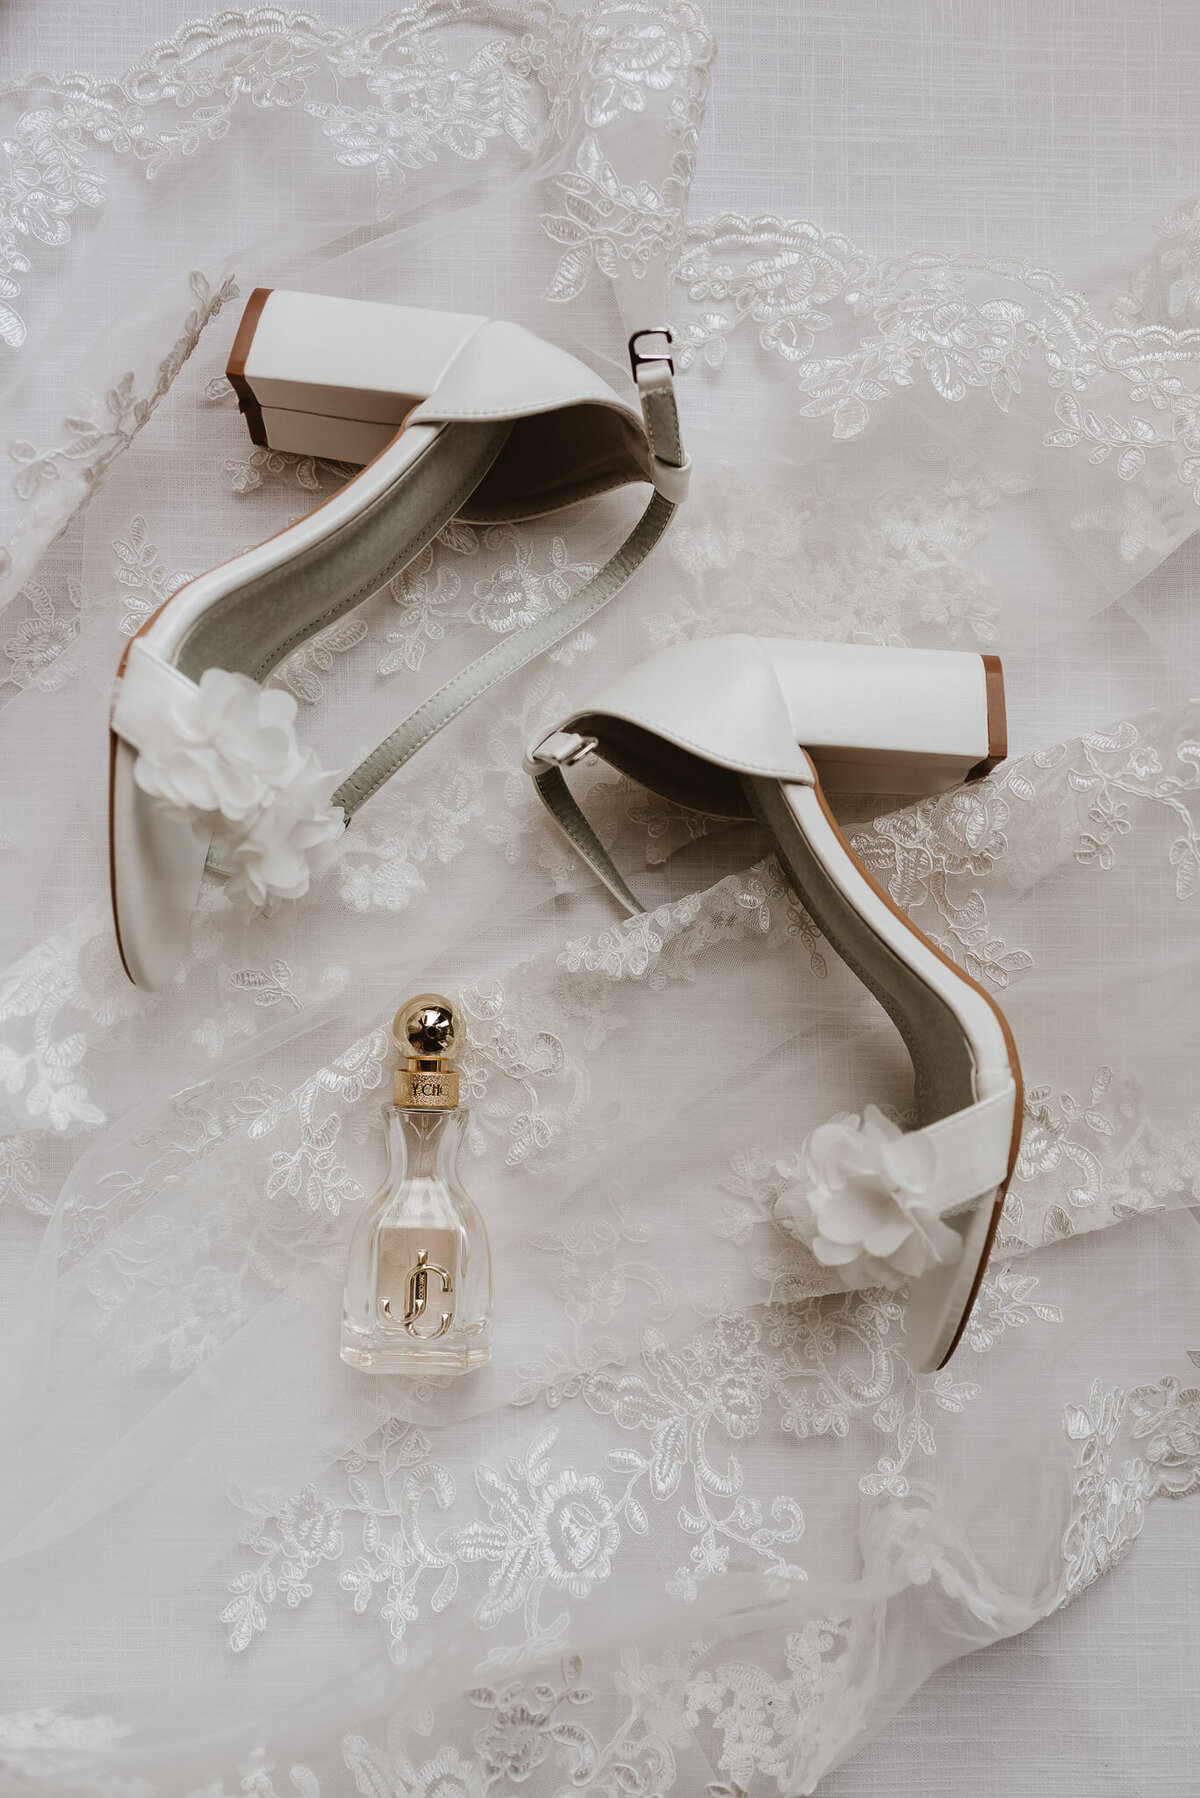 brides shoes, perfume and vail display